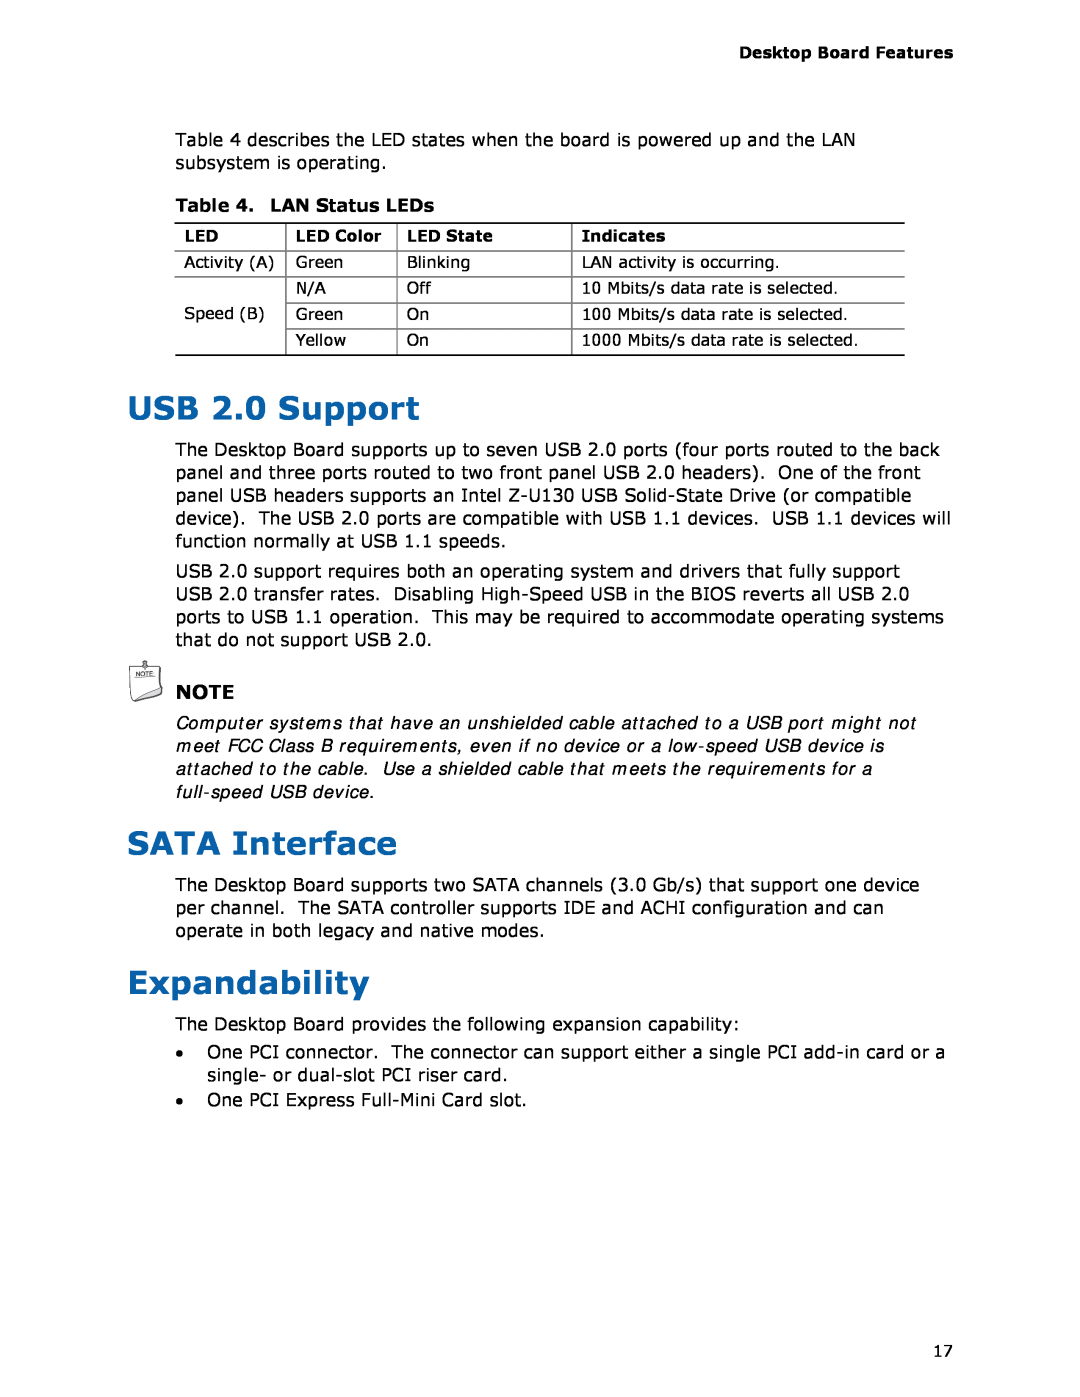 Intel D510MO manual USB 2.0 Support, SATA Interface, Expandability, LAN Status LEDs 